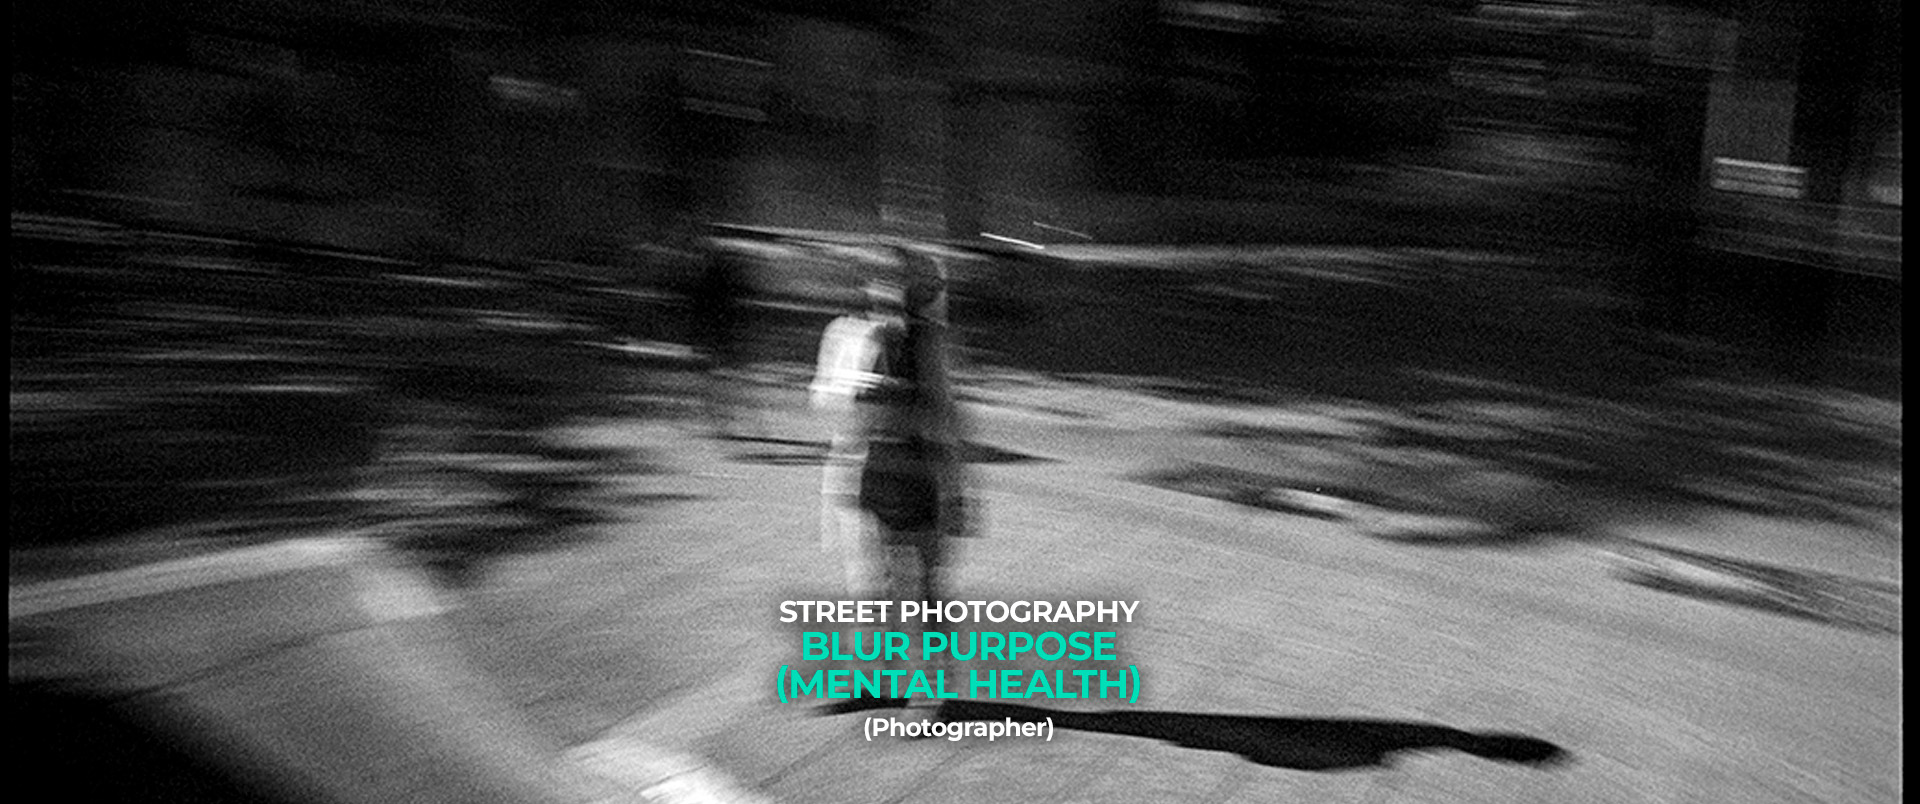 Streetphotography – blur purpose